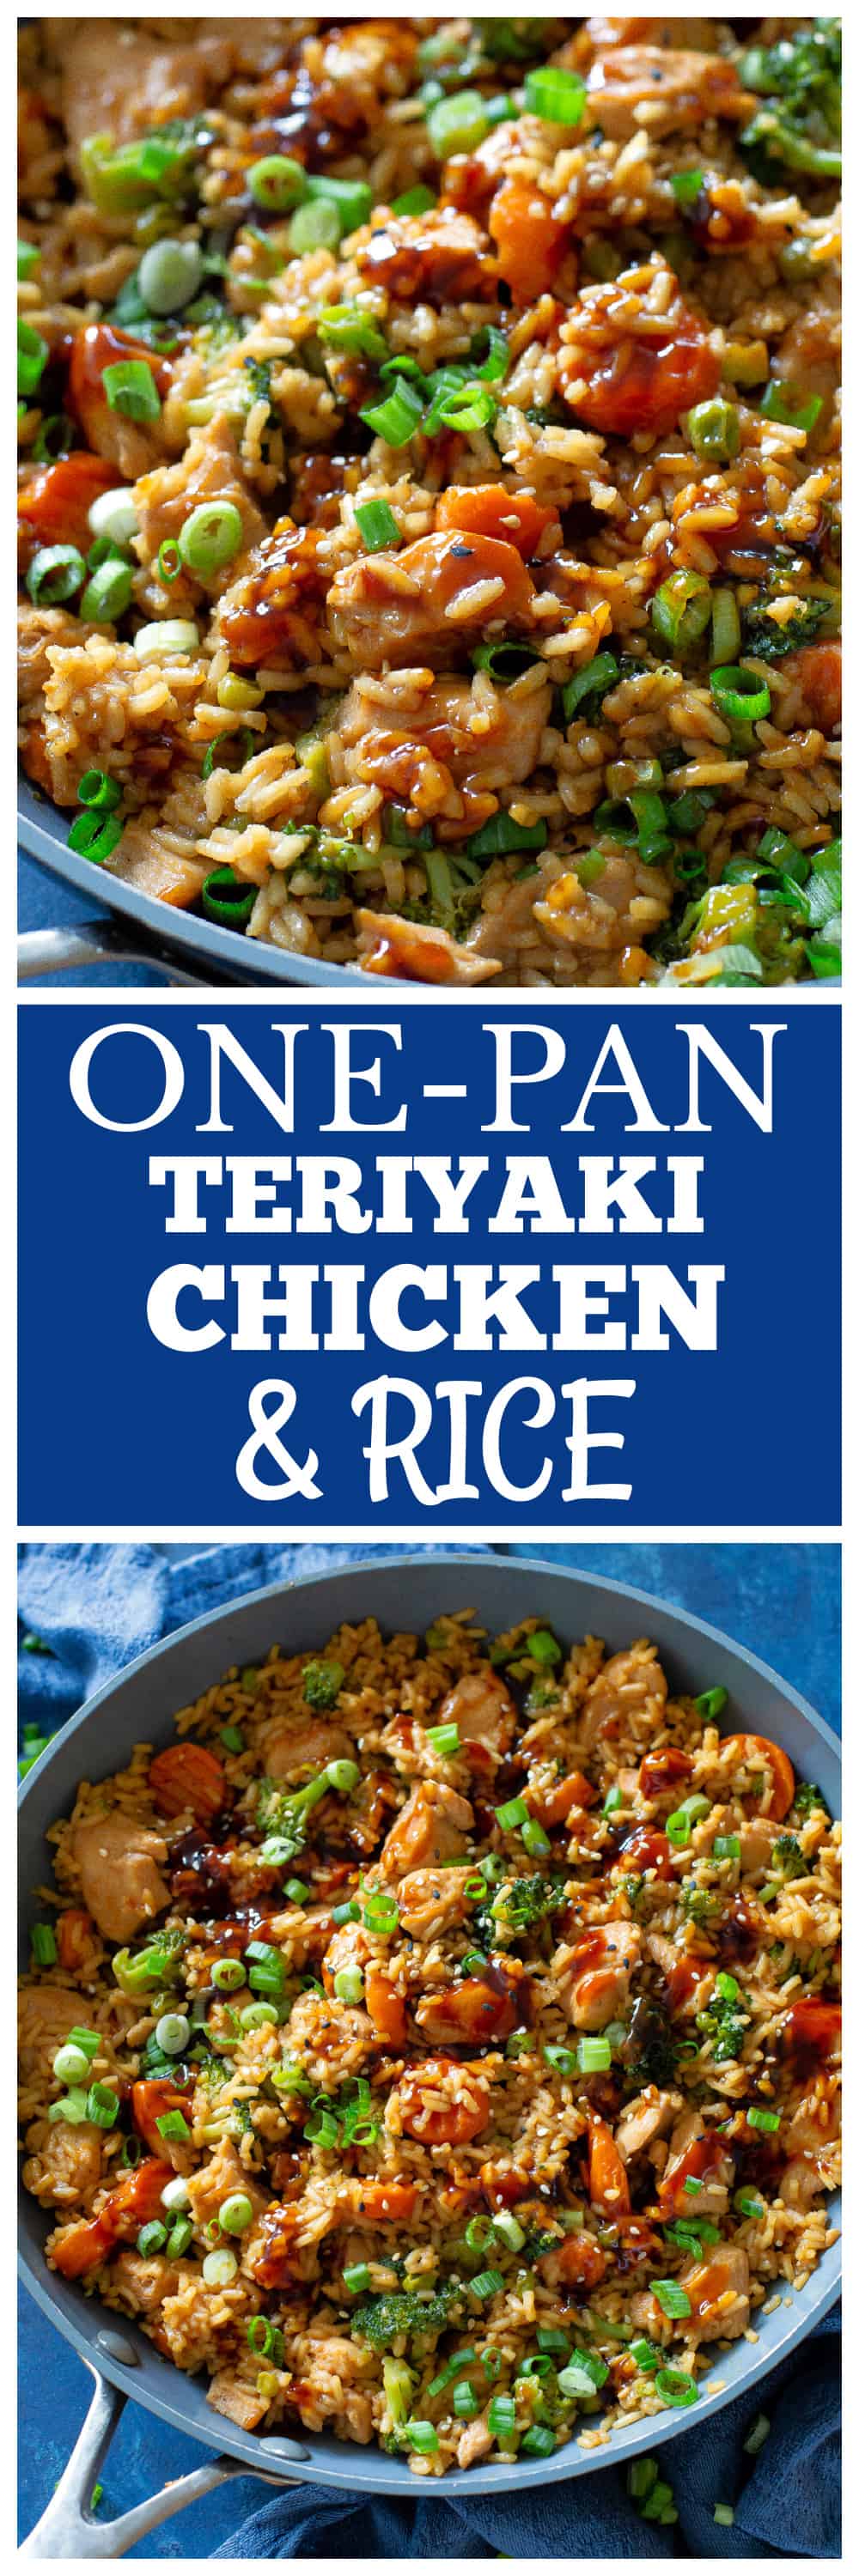 One-Pan Teriyaki Chicken and Rice